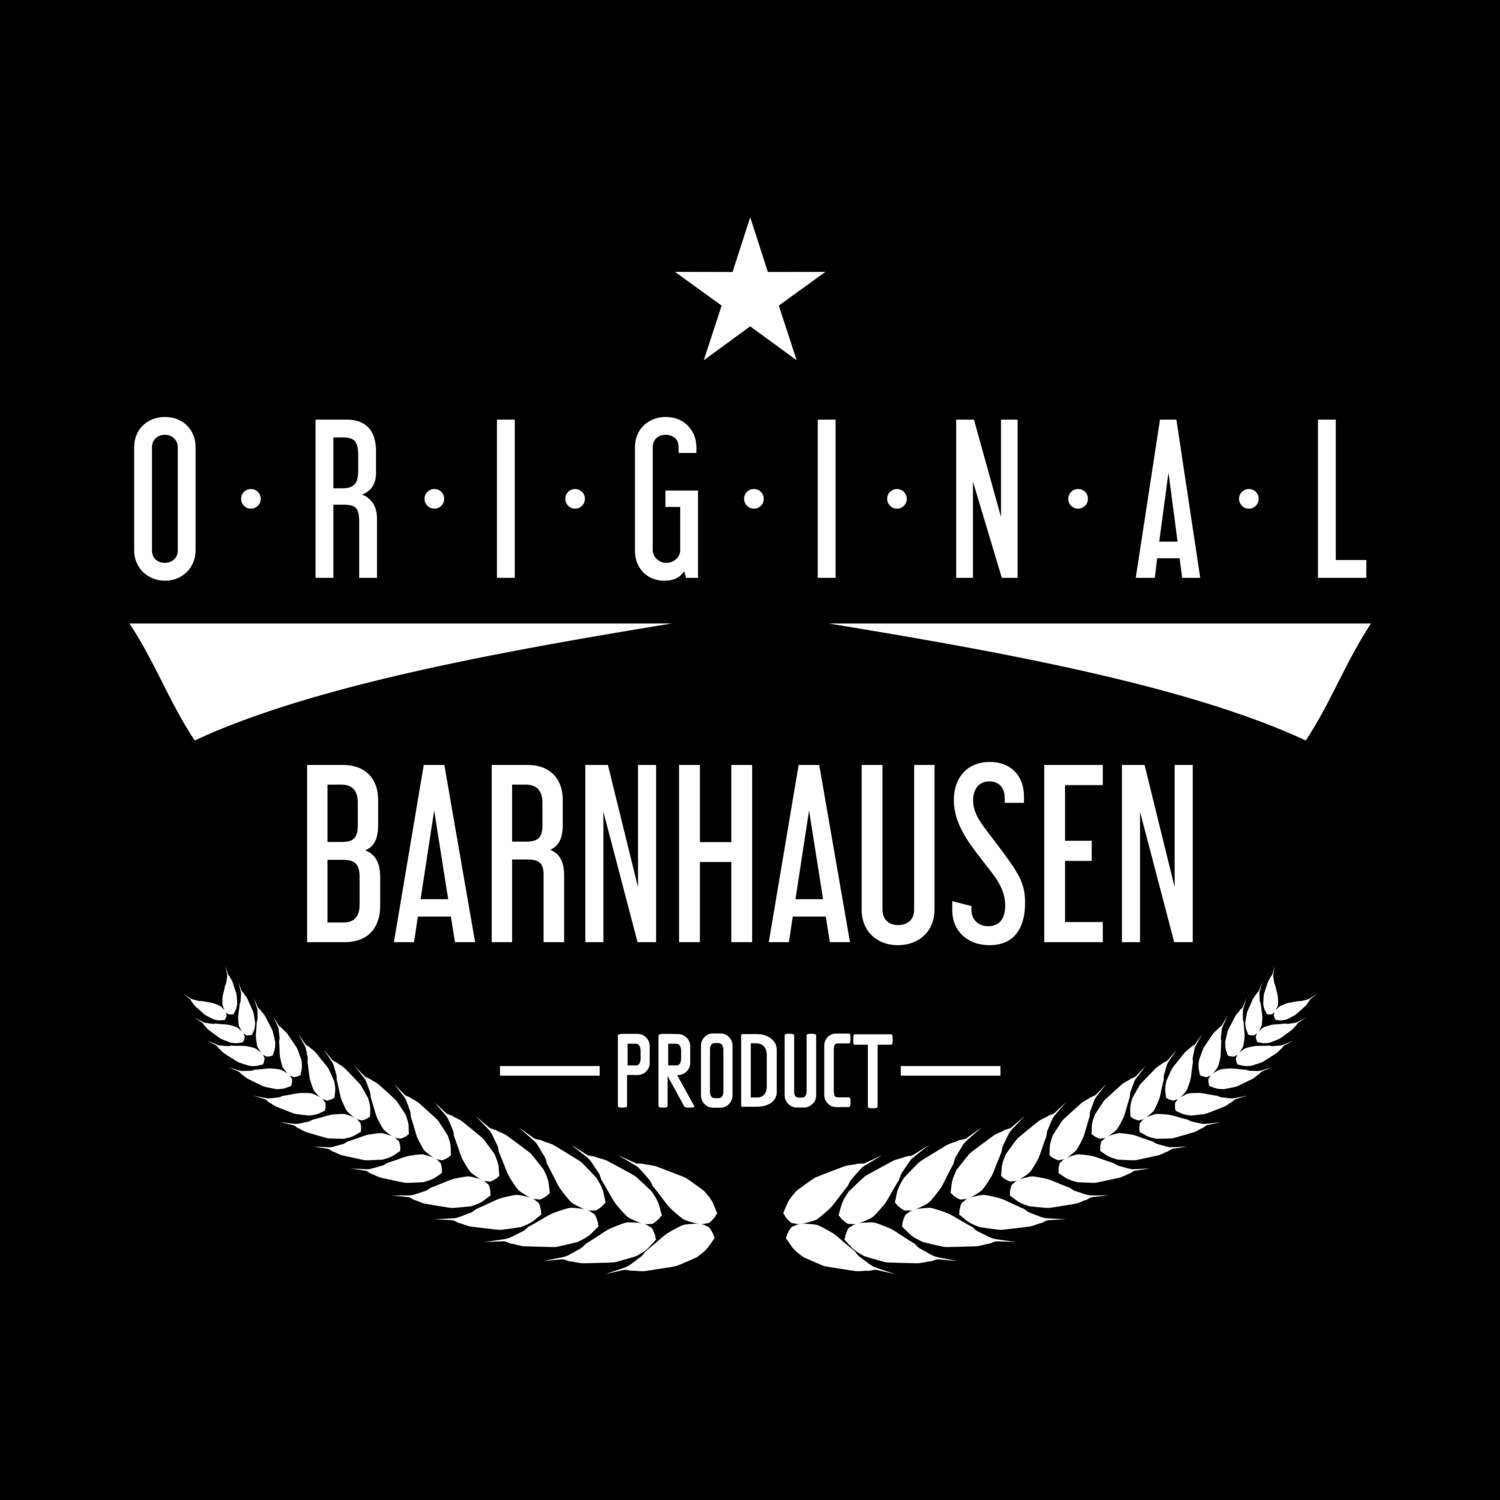 Barnhausen T-Shirt »Original Product«